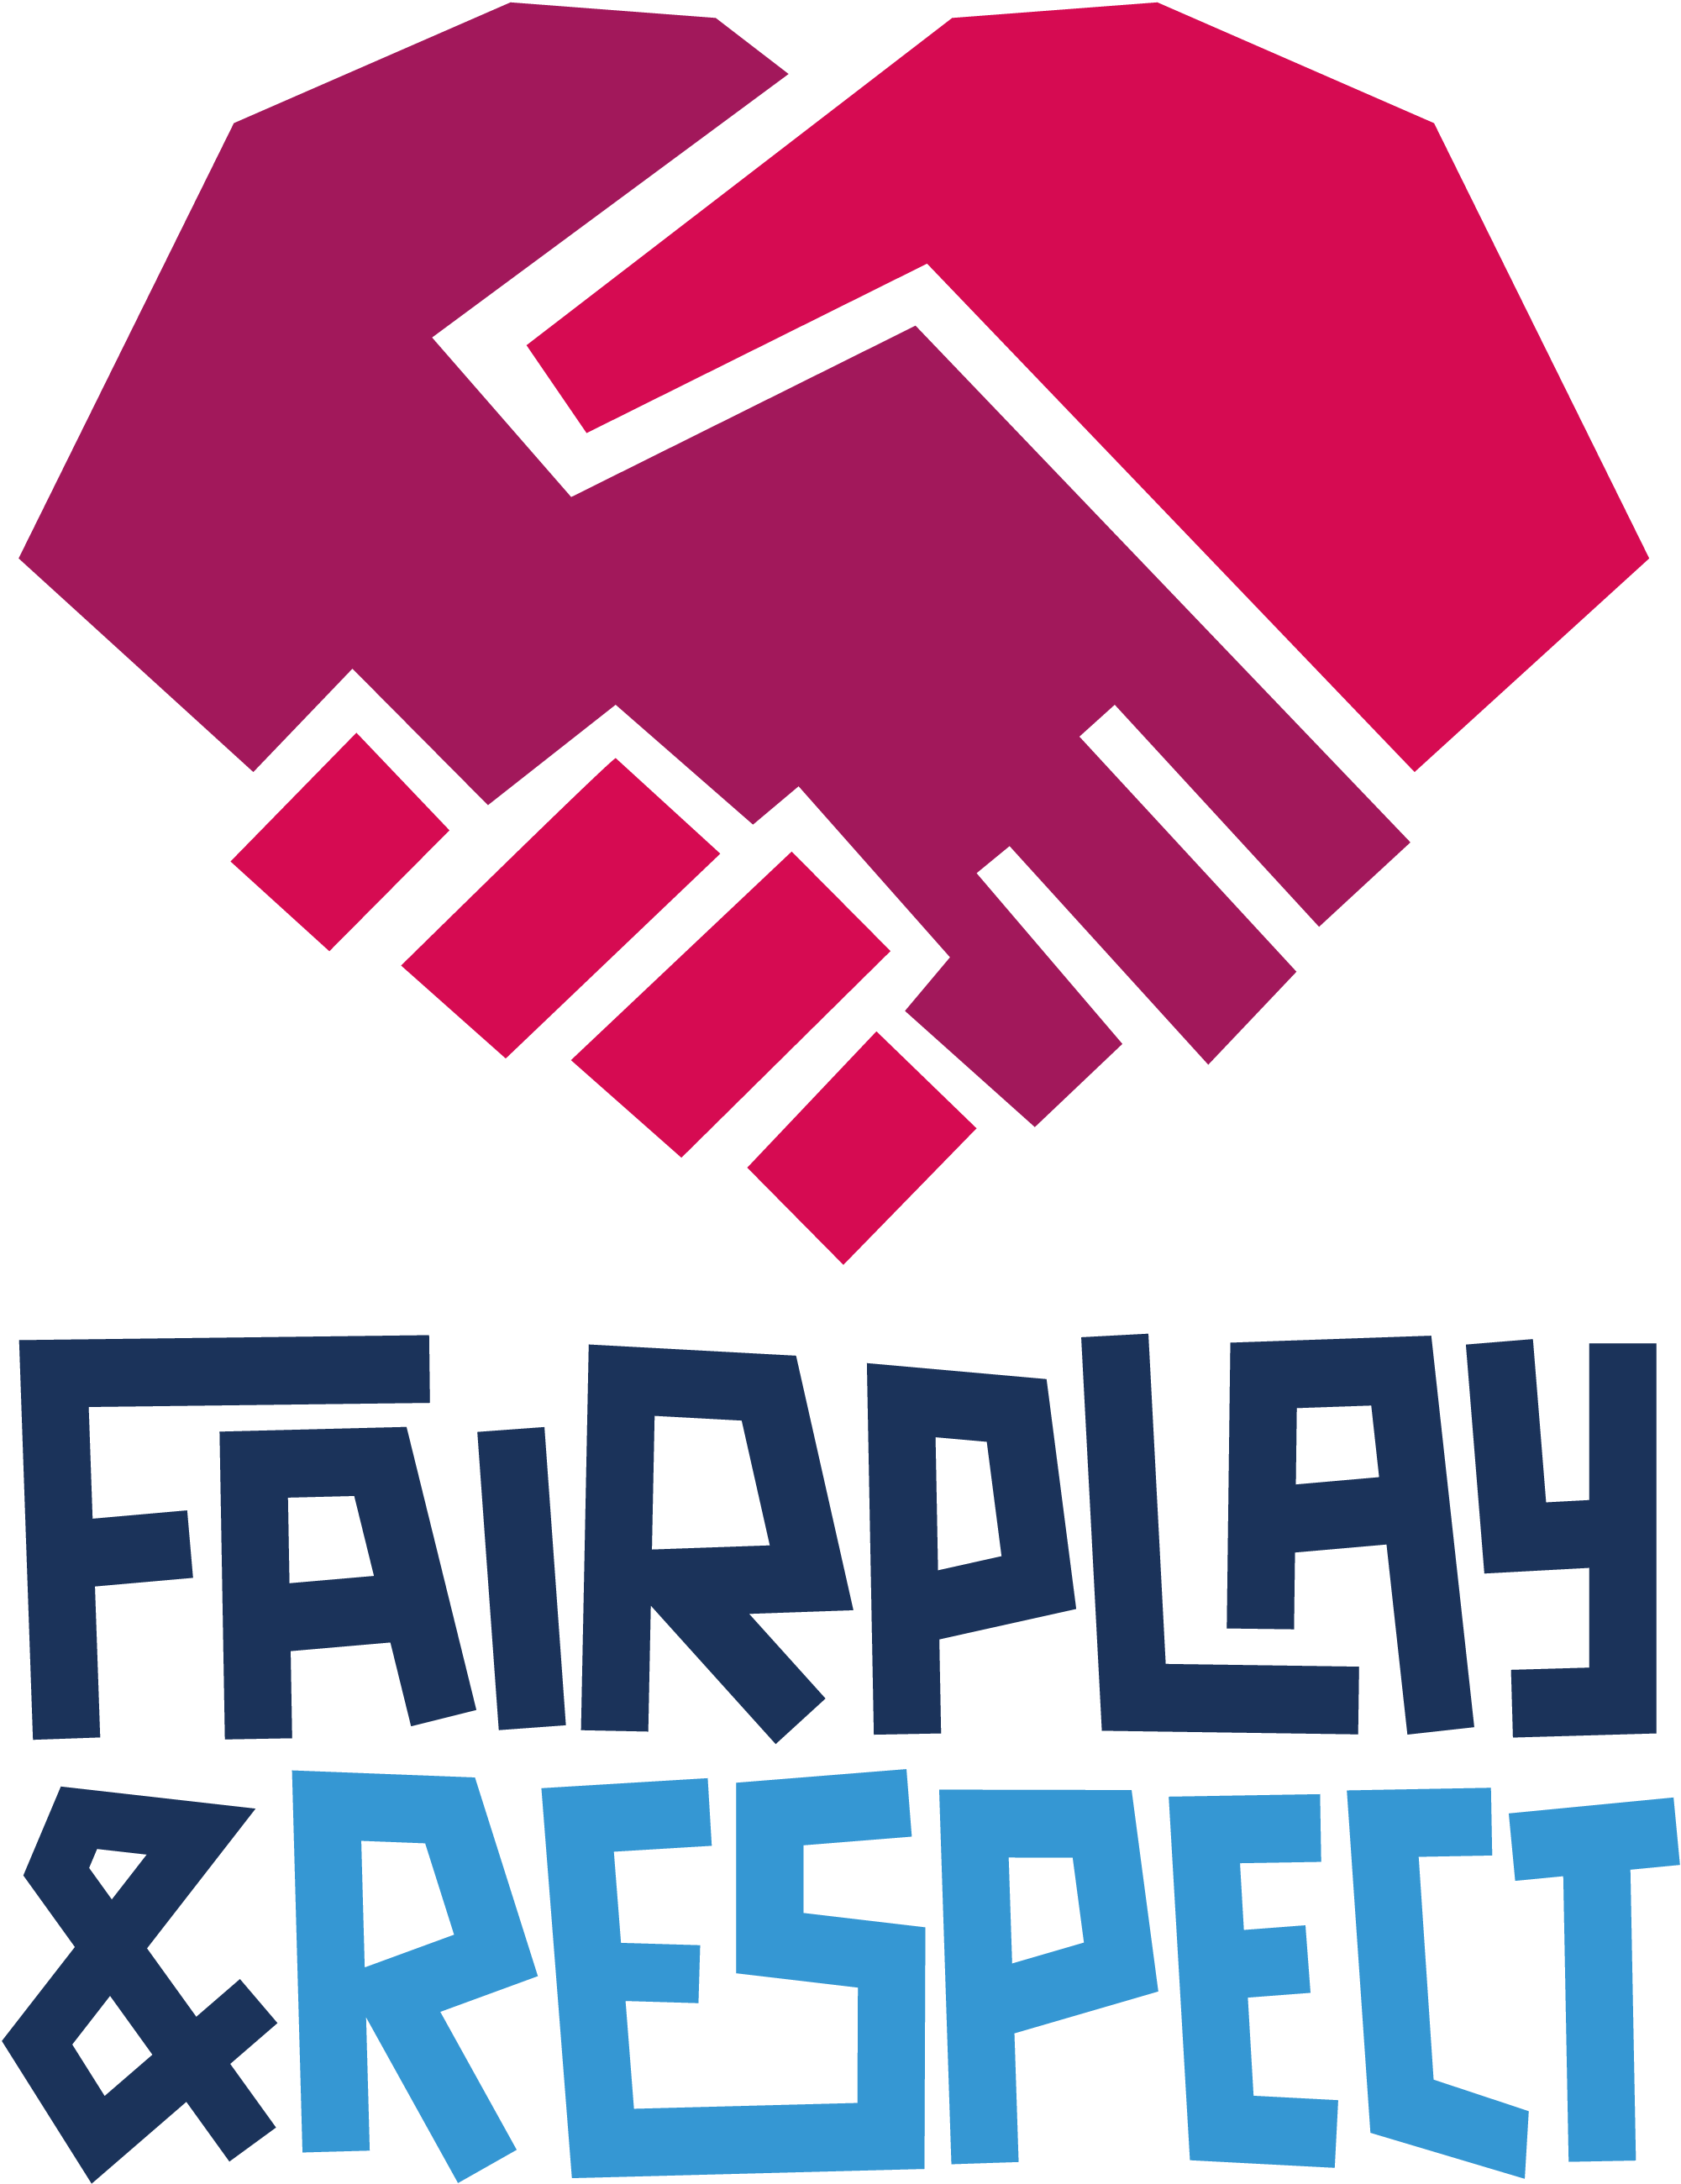 Ijnl fairplay logo staand kleur